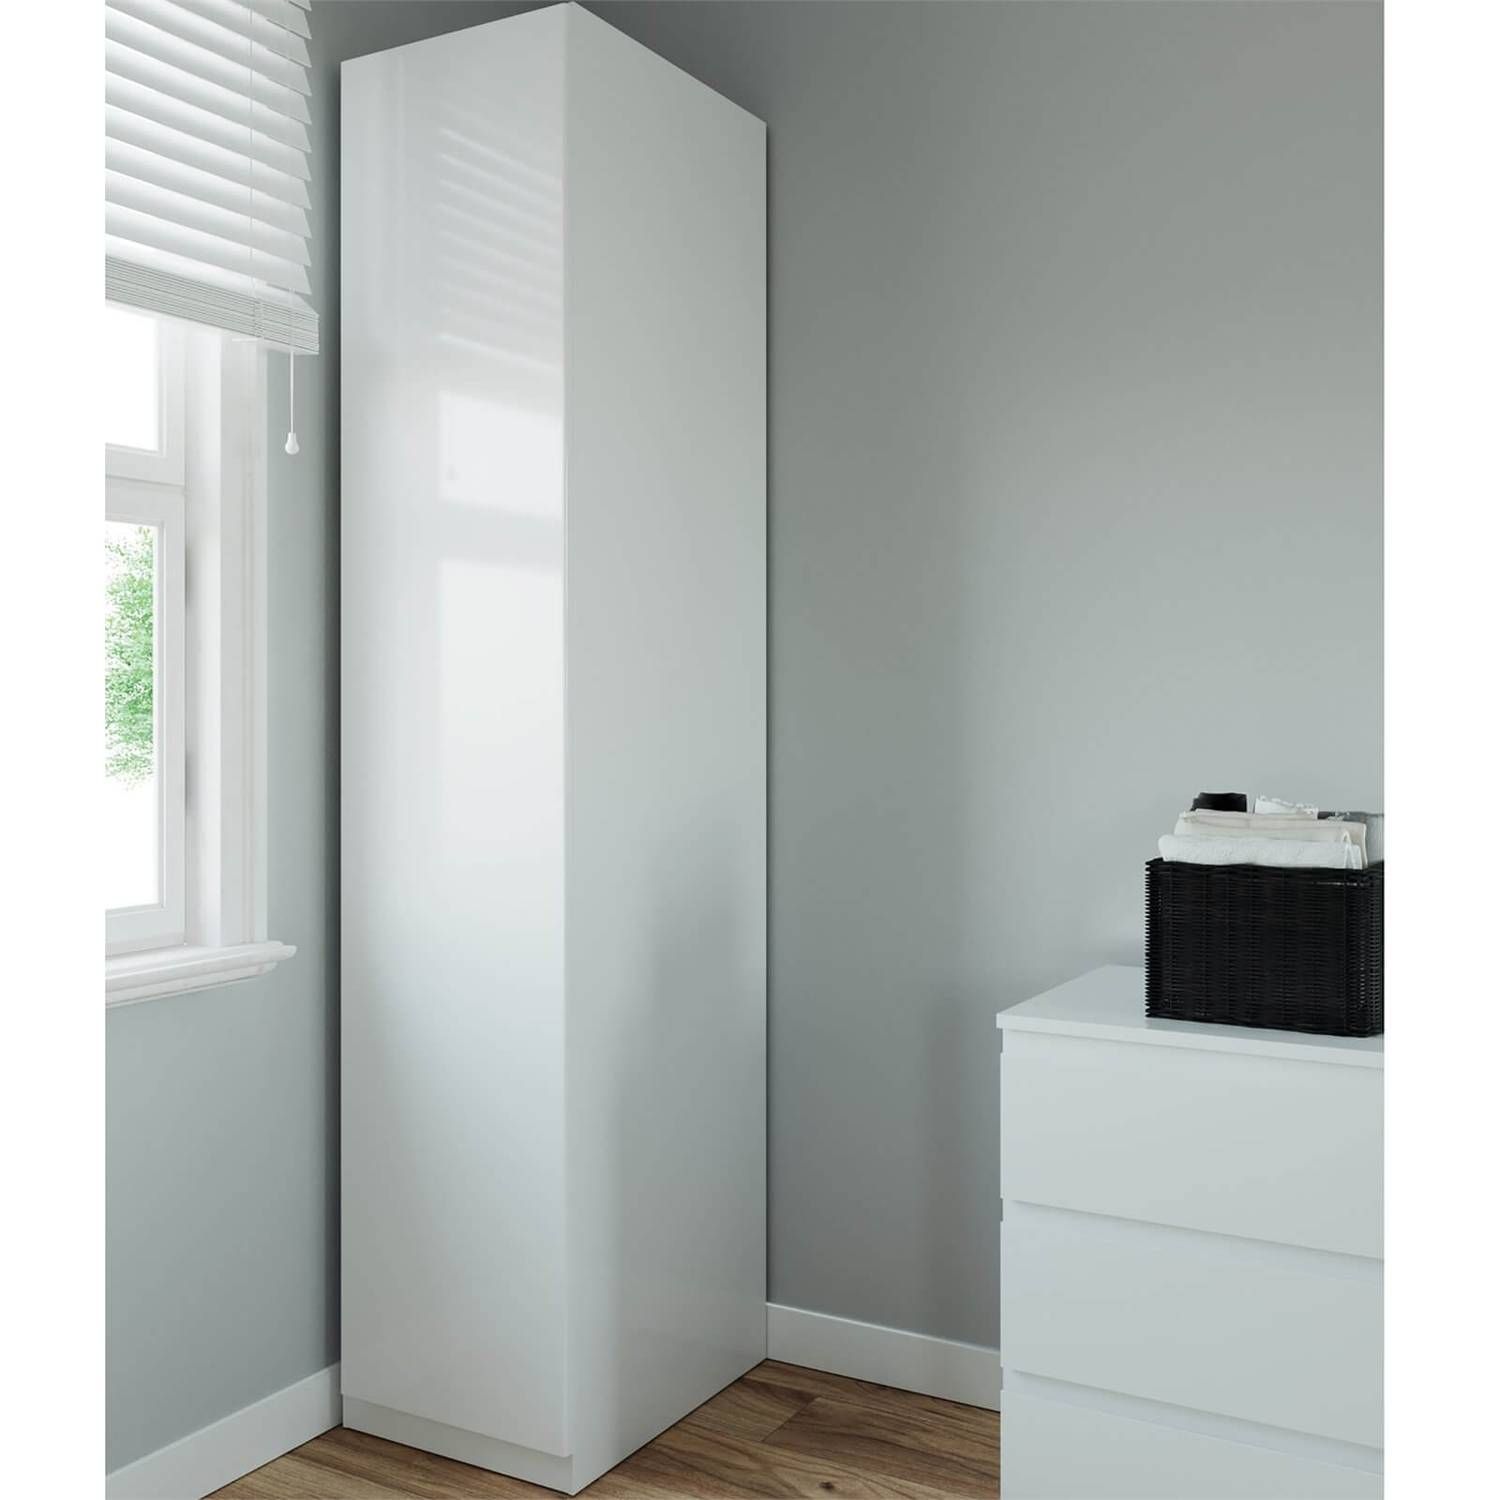 Fitted Bedroom Handleless Single Wardrobe – White | Homebase Inside Single White Wardrobes (Photo 1 of 7)